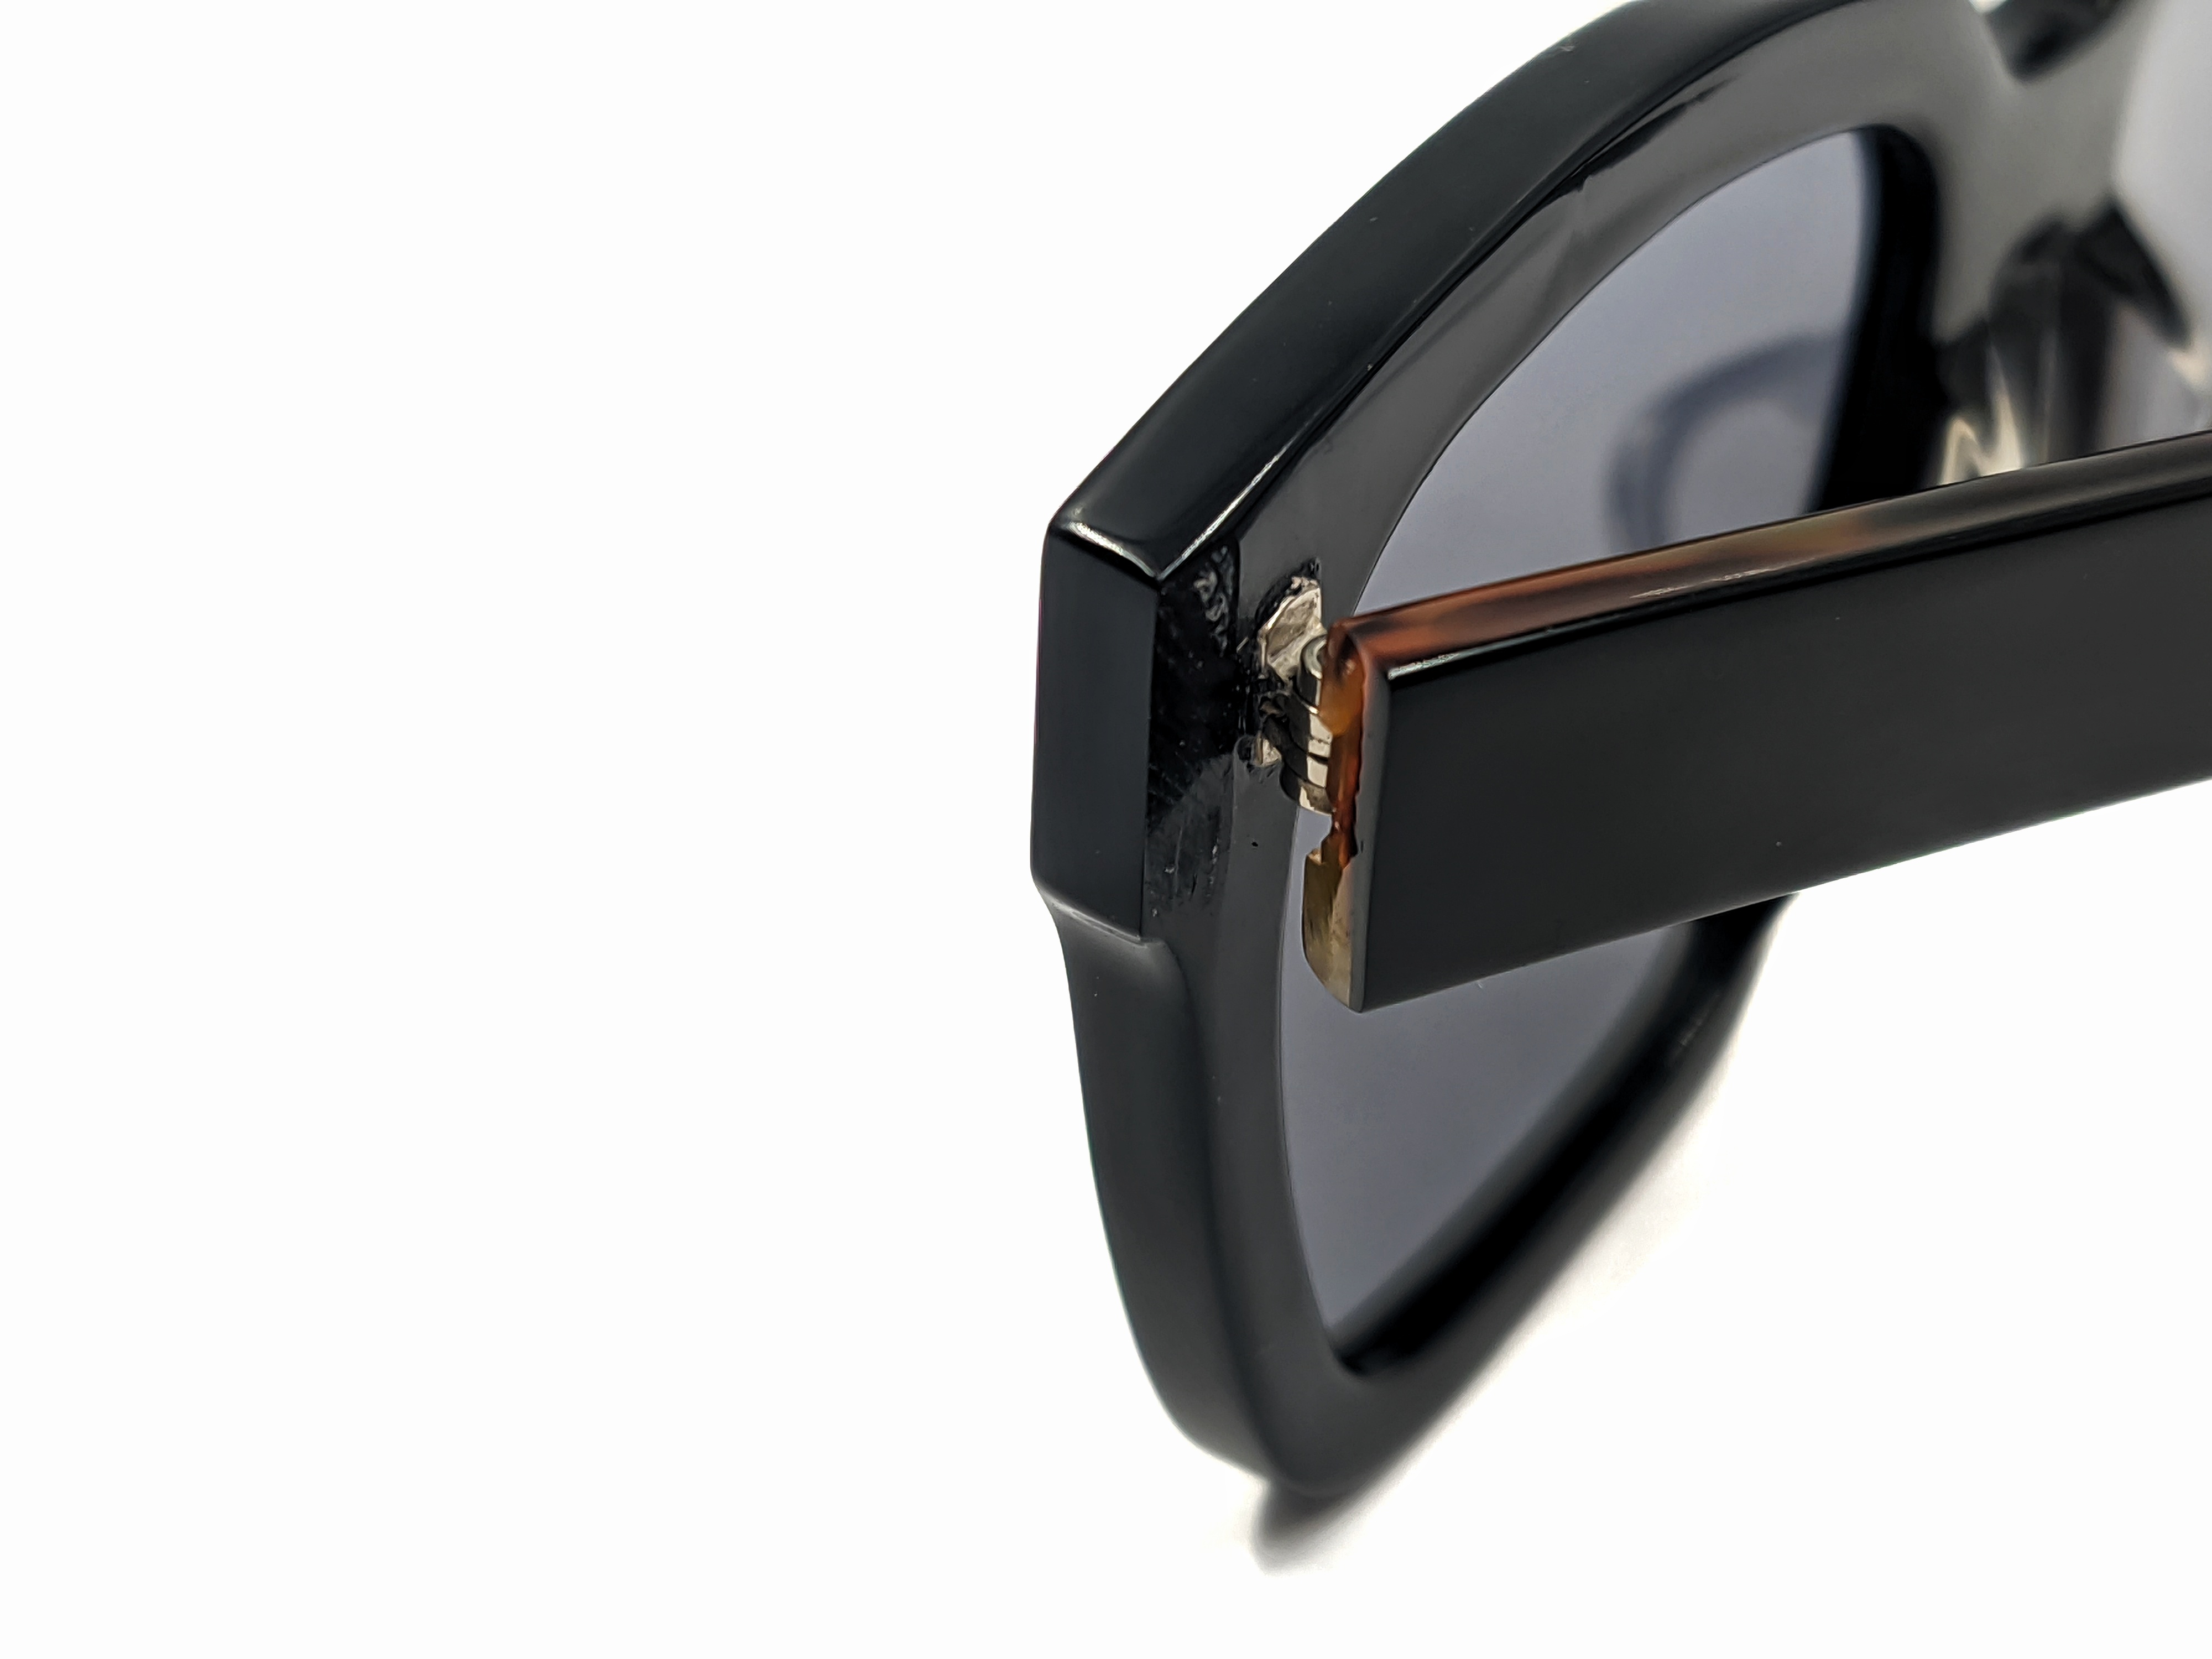 Black custom anti-ultraviolet square frame polarized women sunglasses 2021 men oversized shades UV400 fashion classic luxury